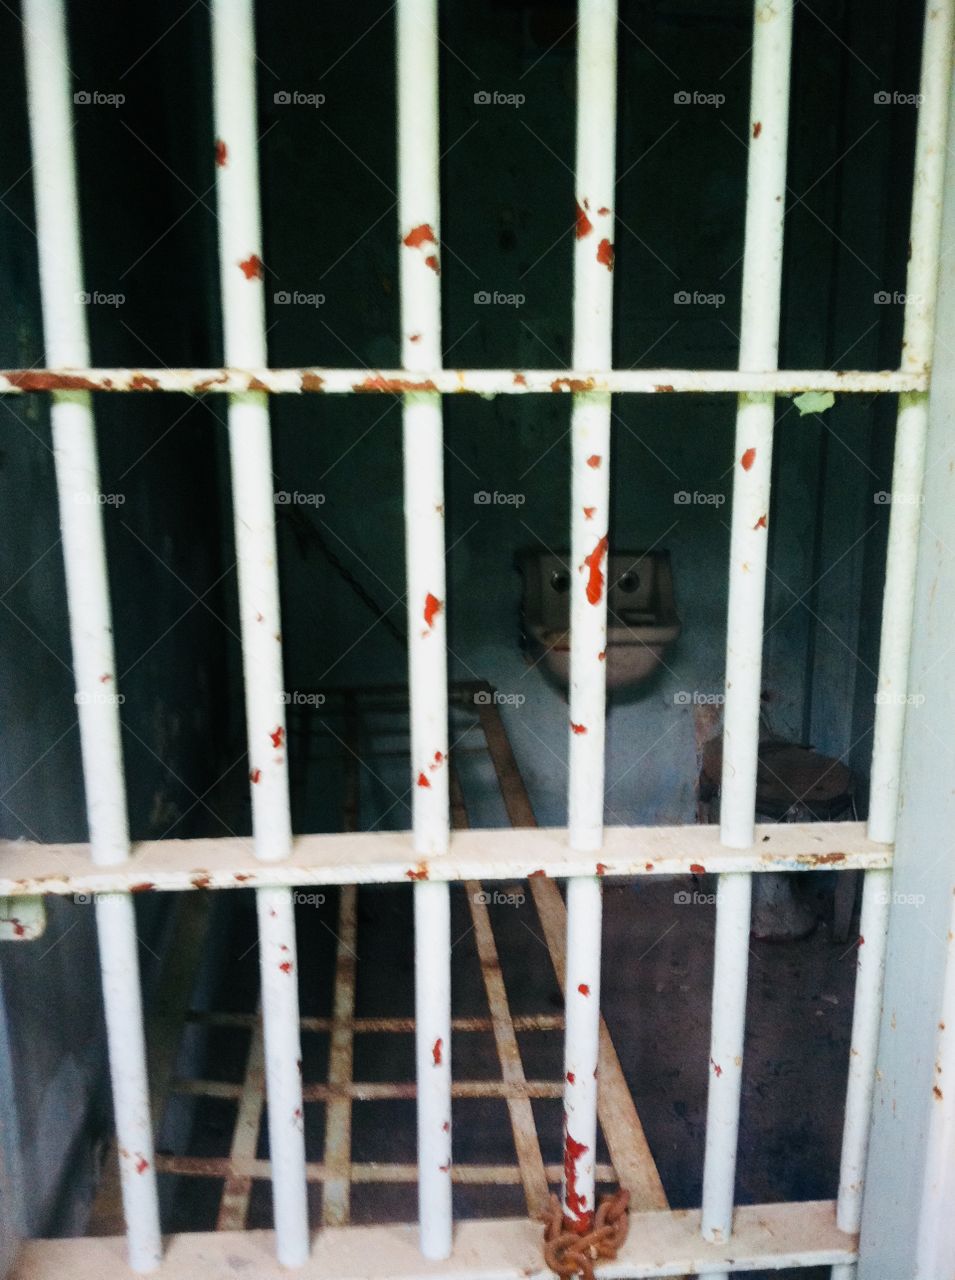 Moundsville WV prison museum—inmates prison cell, peeling paint, sink, bunk